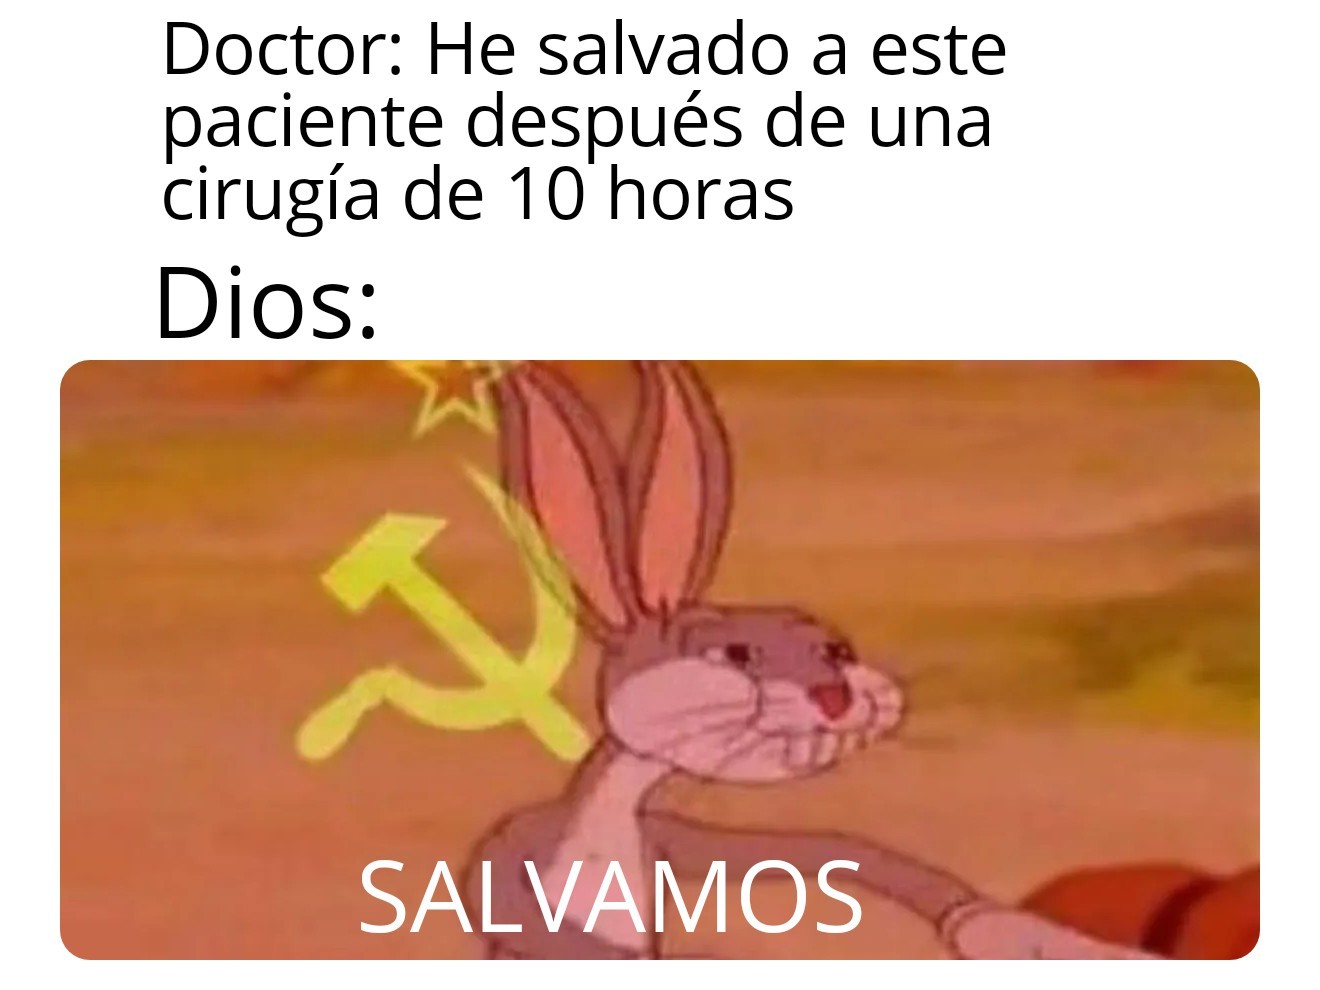 SALVAMOS - meme